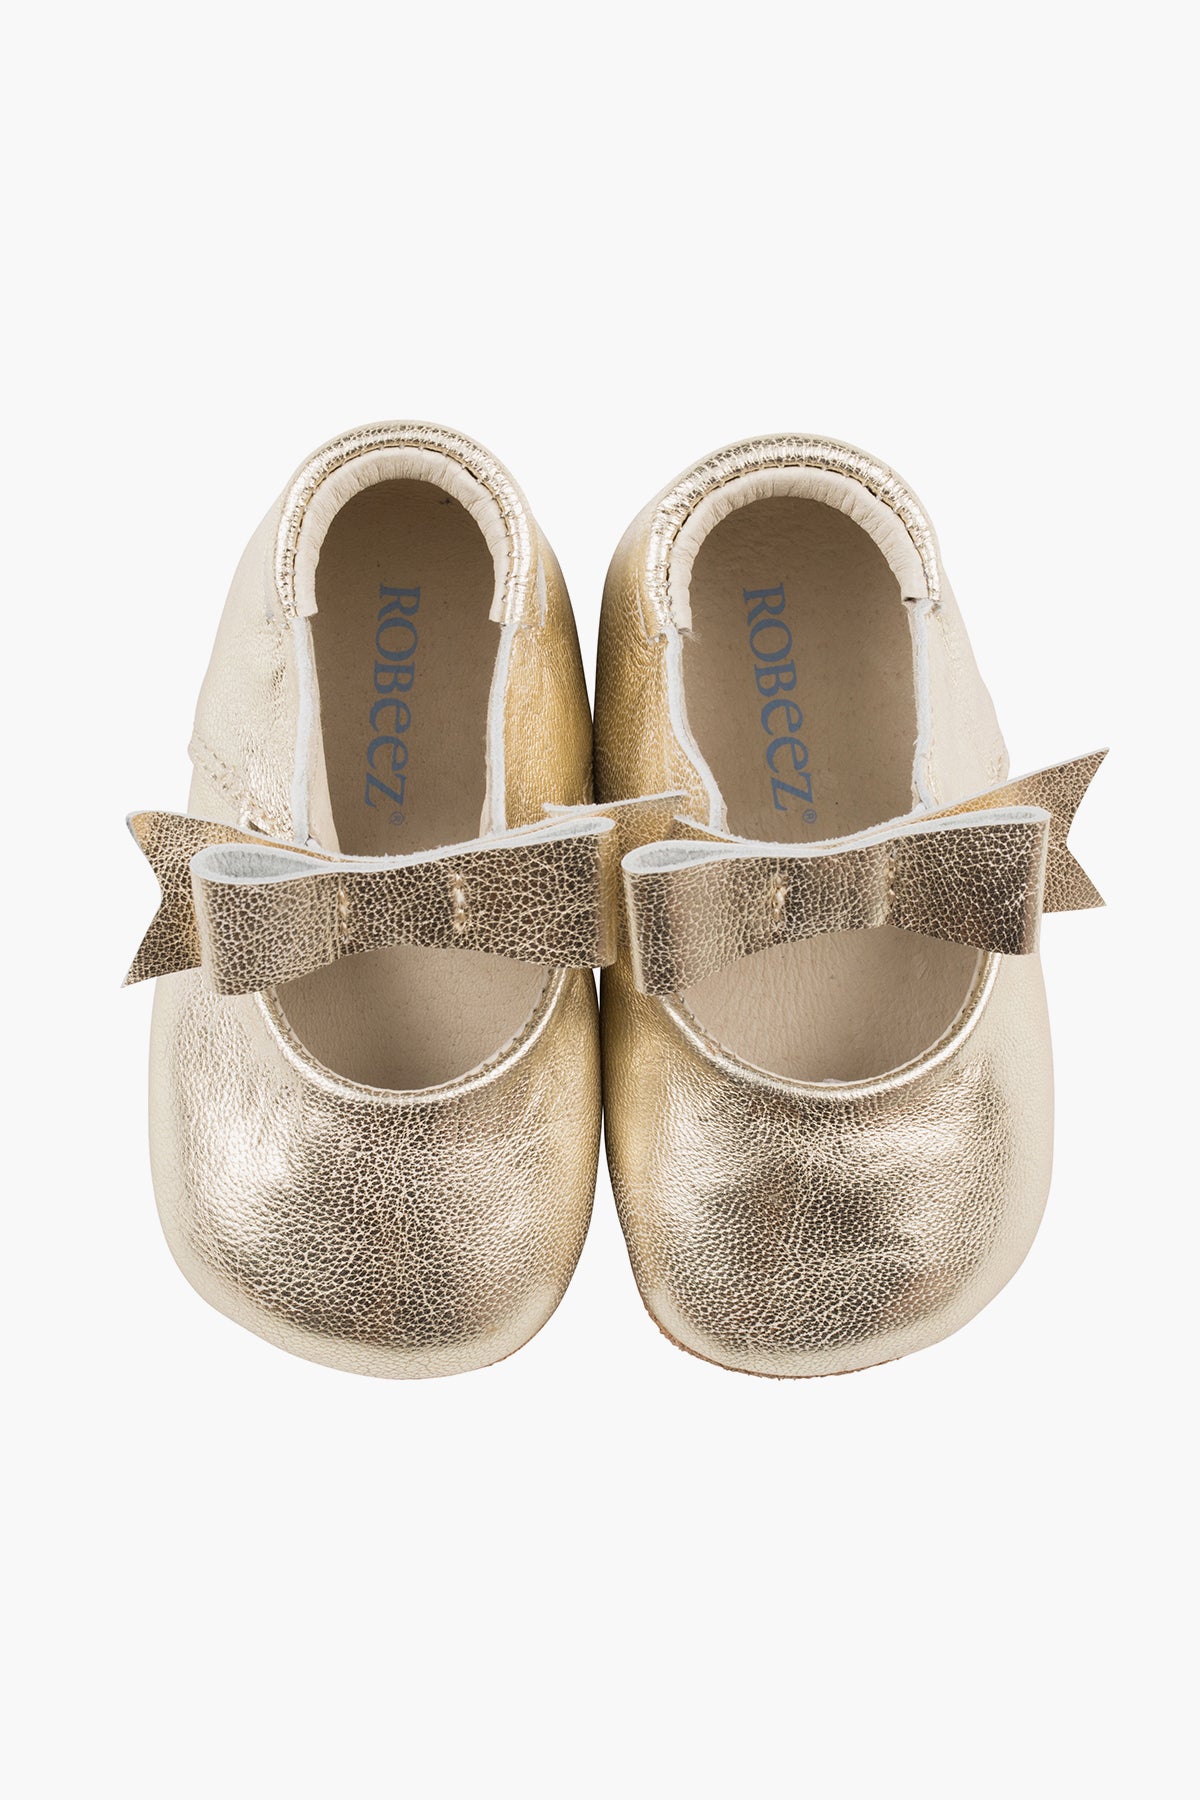 Robeez Sofia Baby Girls Shoes - Gold – Mini Ruby